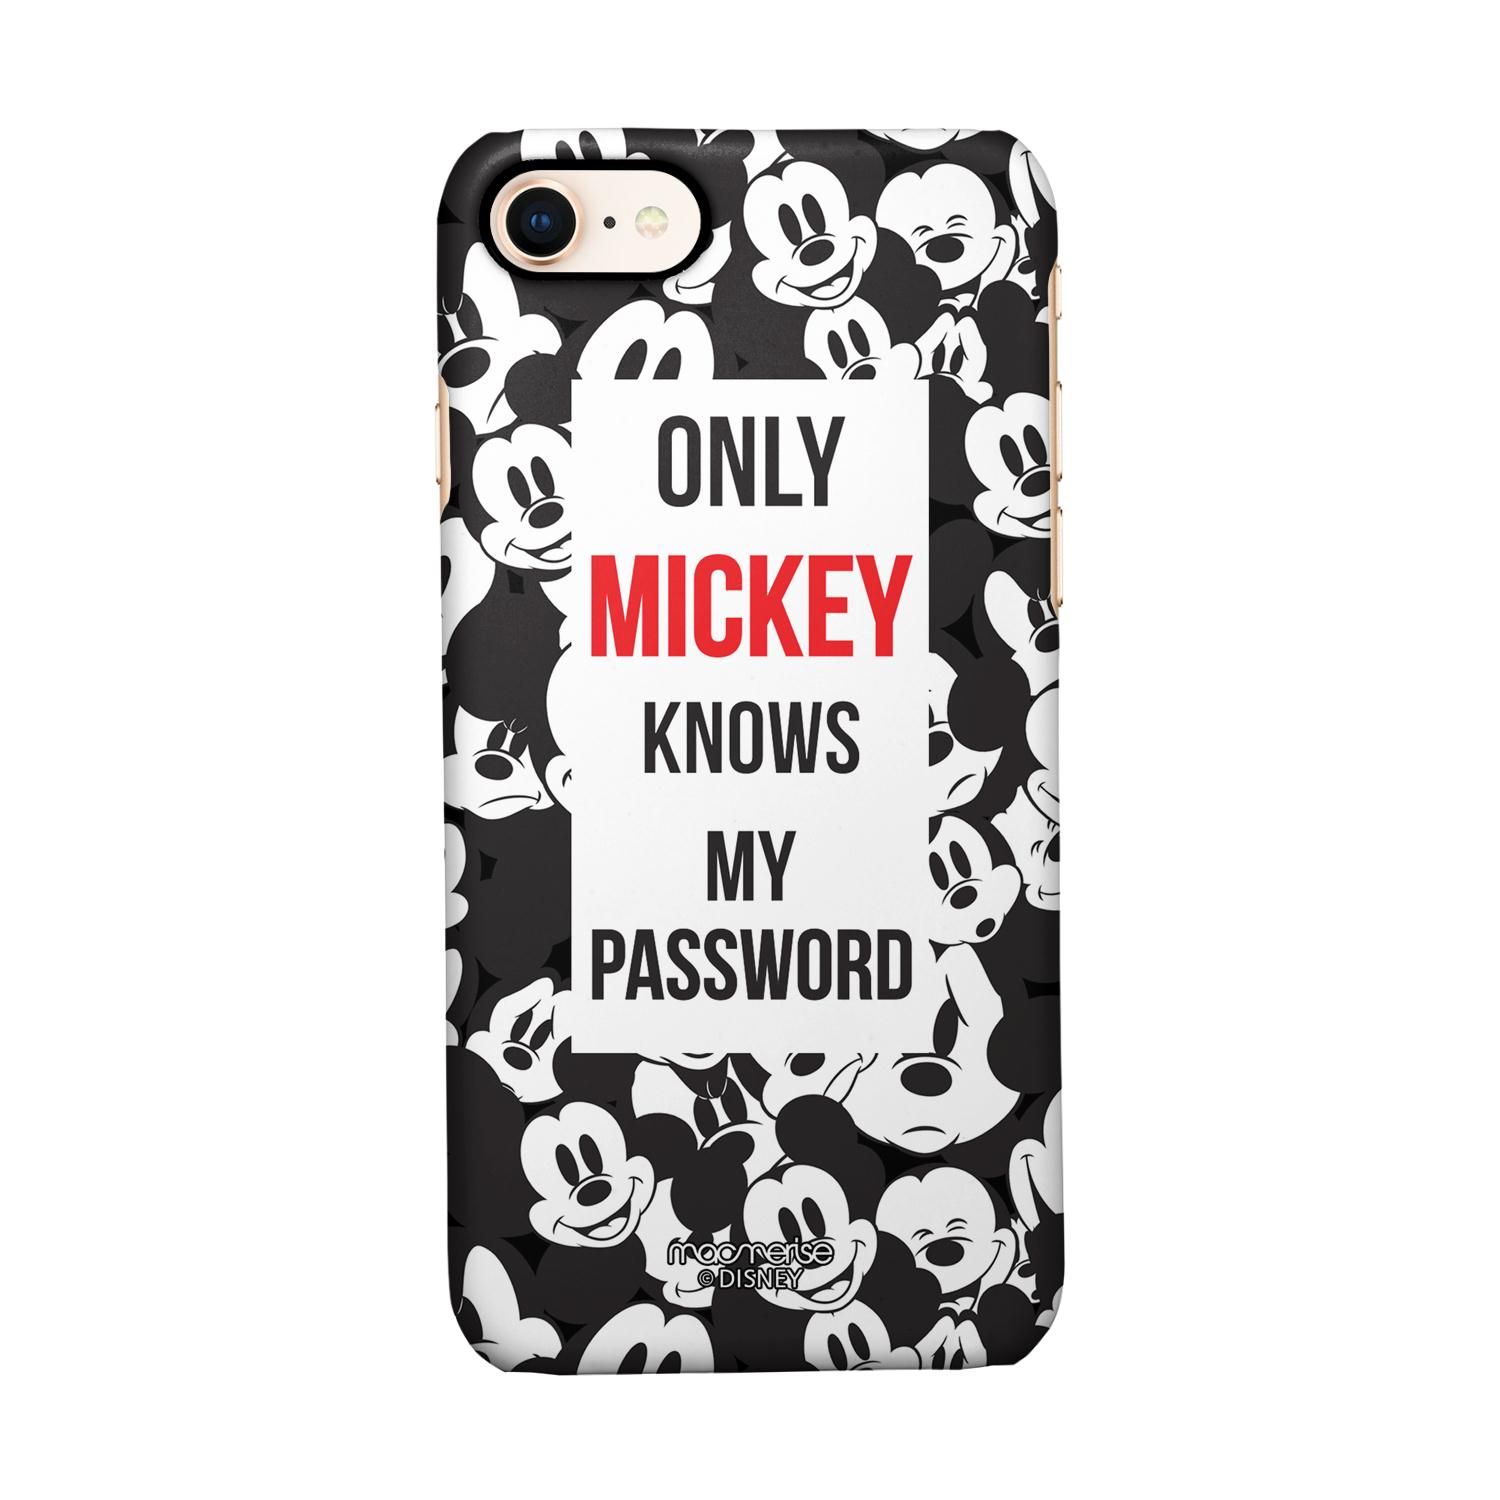 Buy Mickey my Password - Sleek Phone Case for iPhone 8 Online